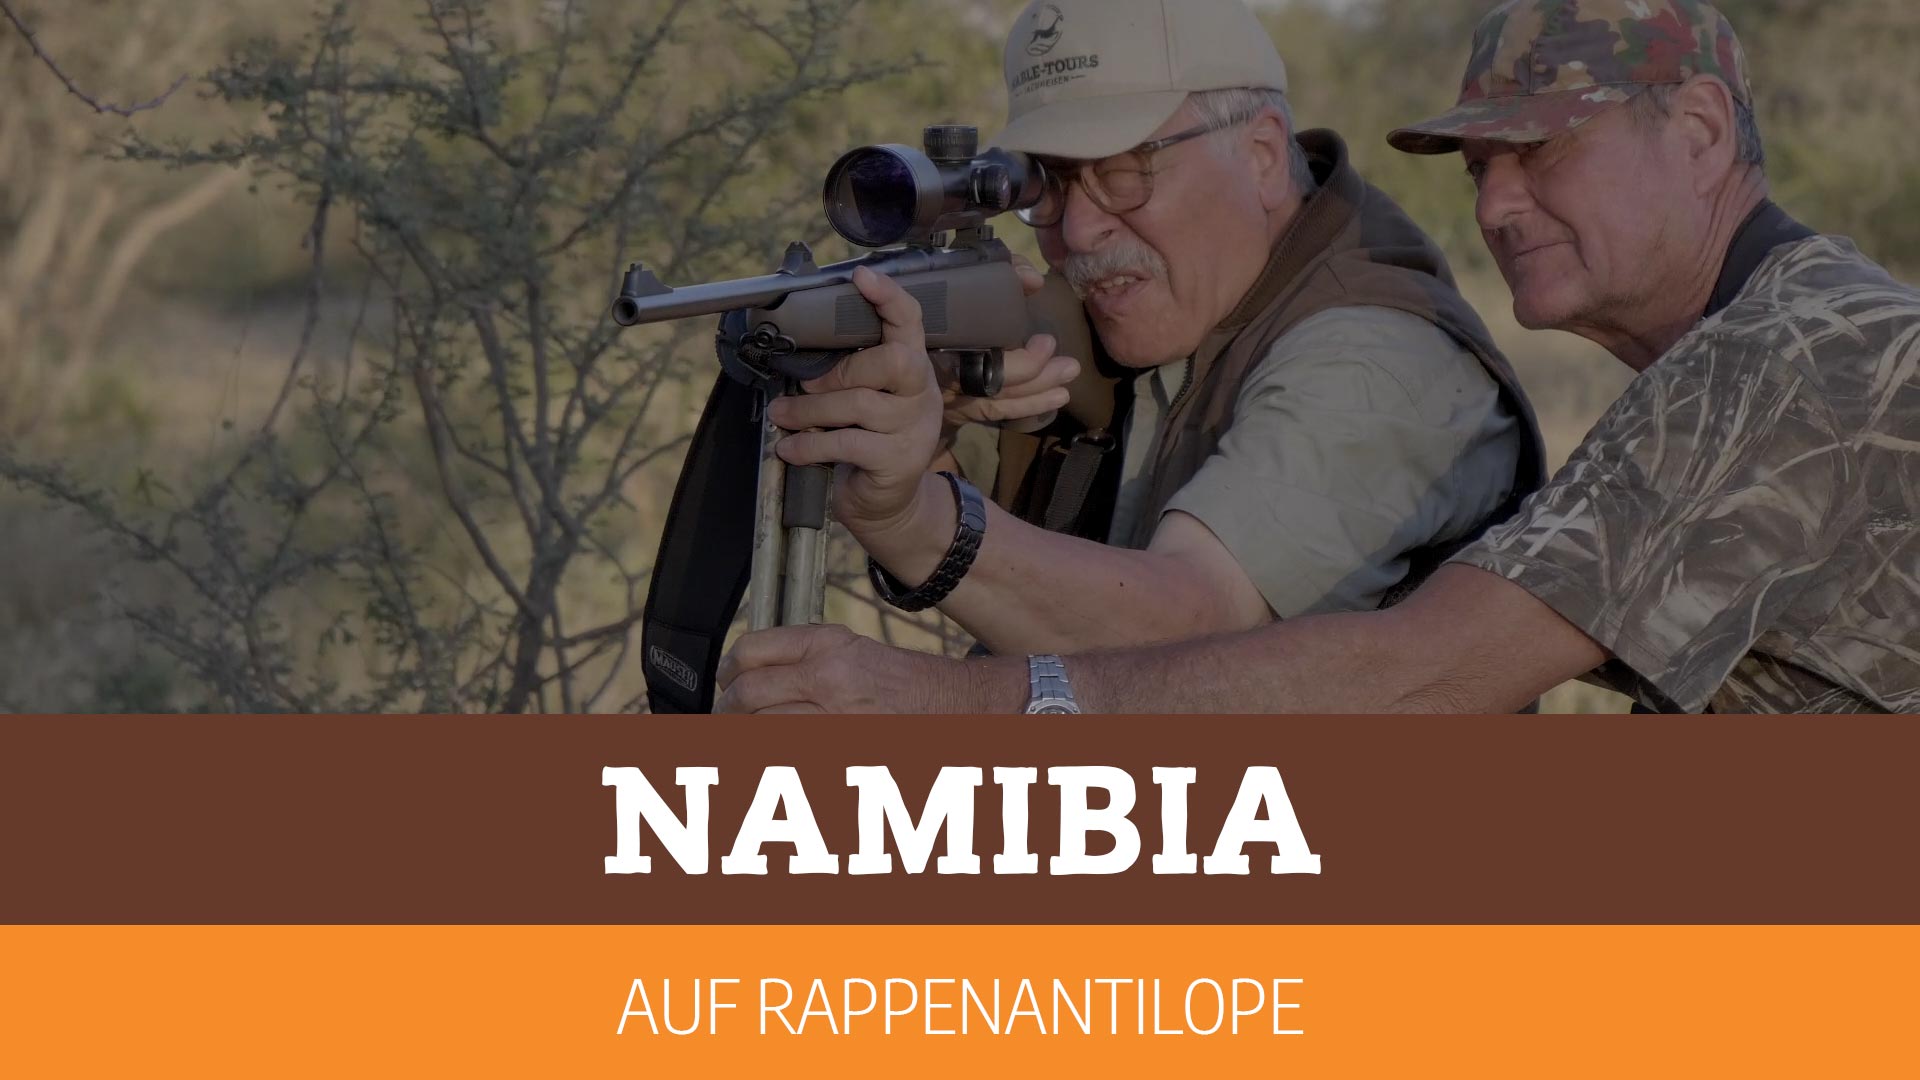 Auf Rappenantilope in Namibia